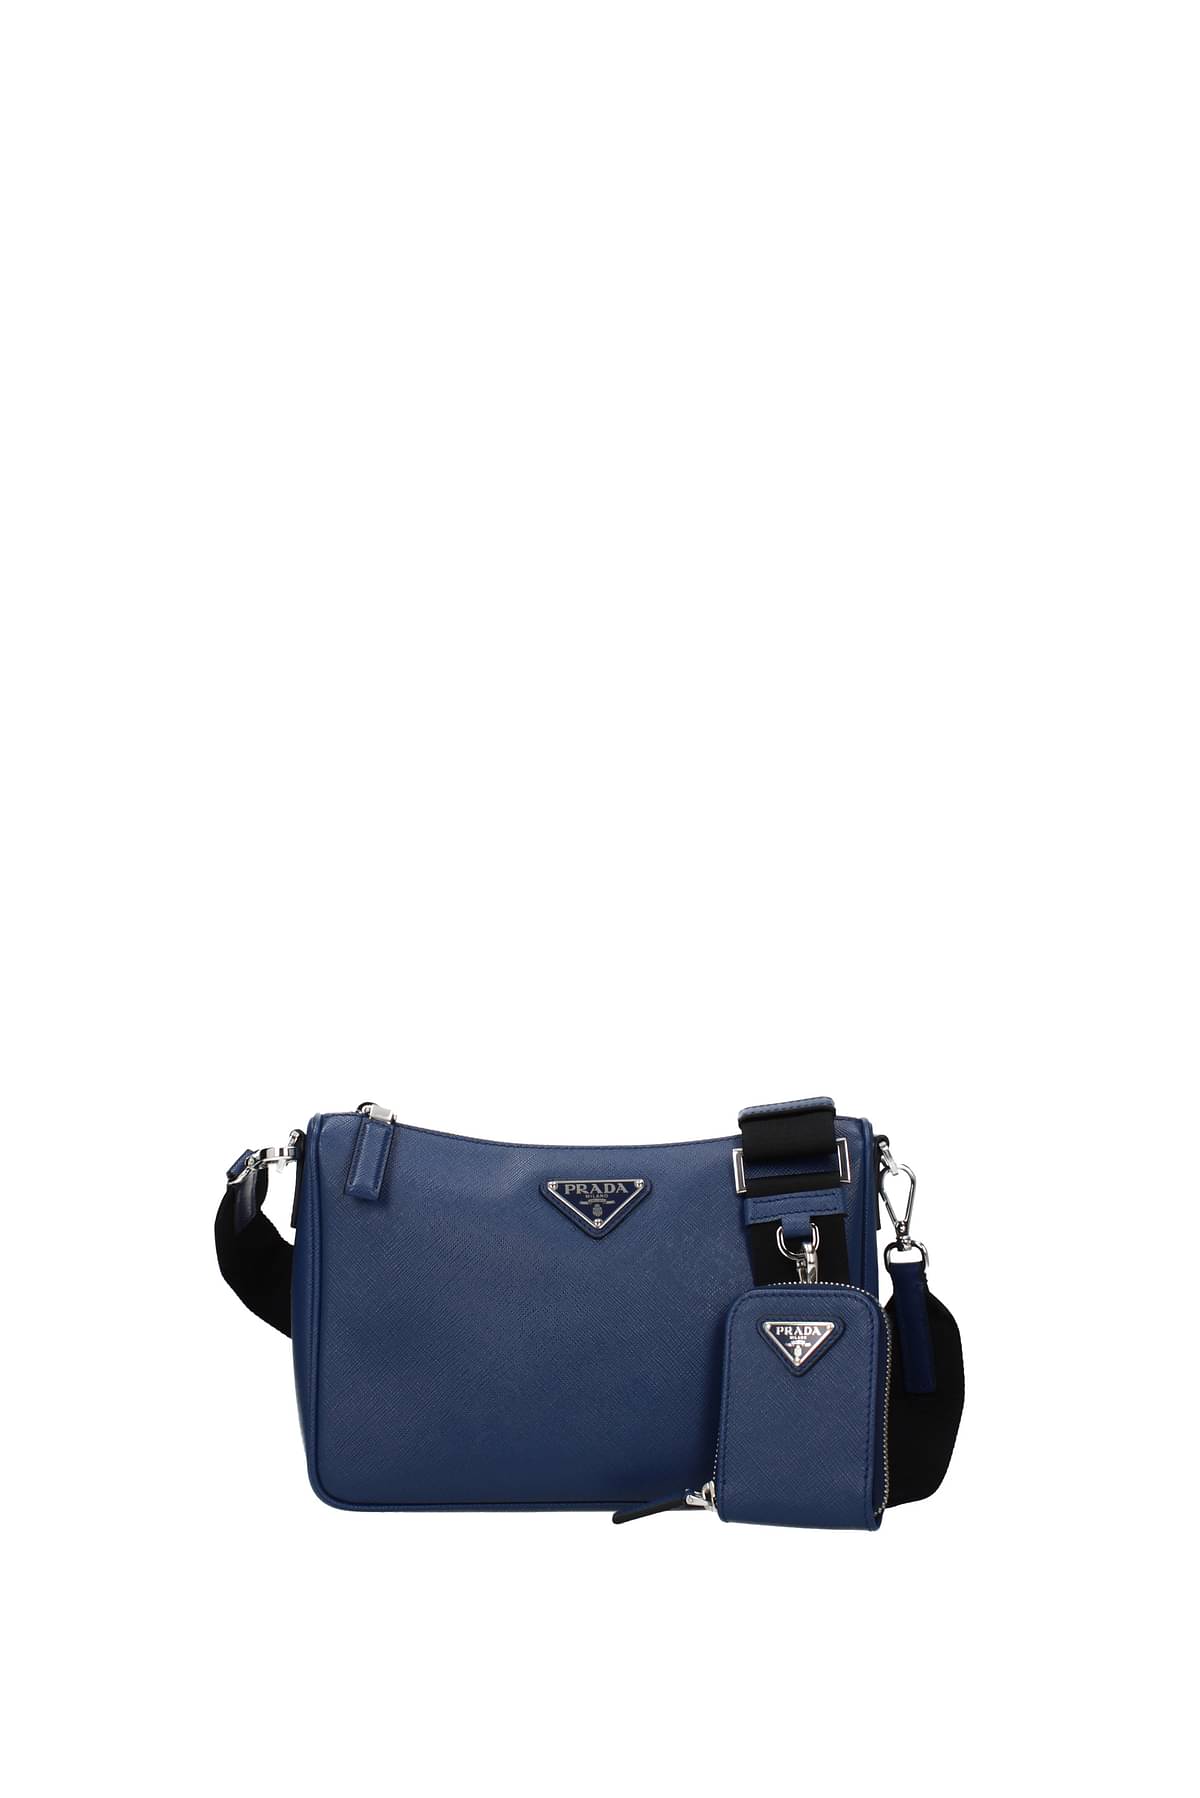 Prada Crossbody Bag Men 2VH1139Z2DMPF0KJ6 Leather Blue Royal Blue 1657,5€